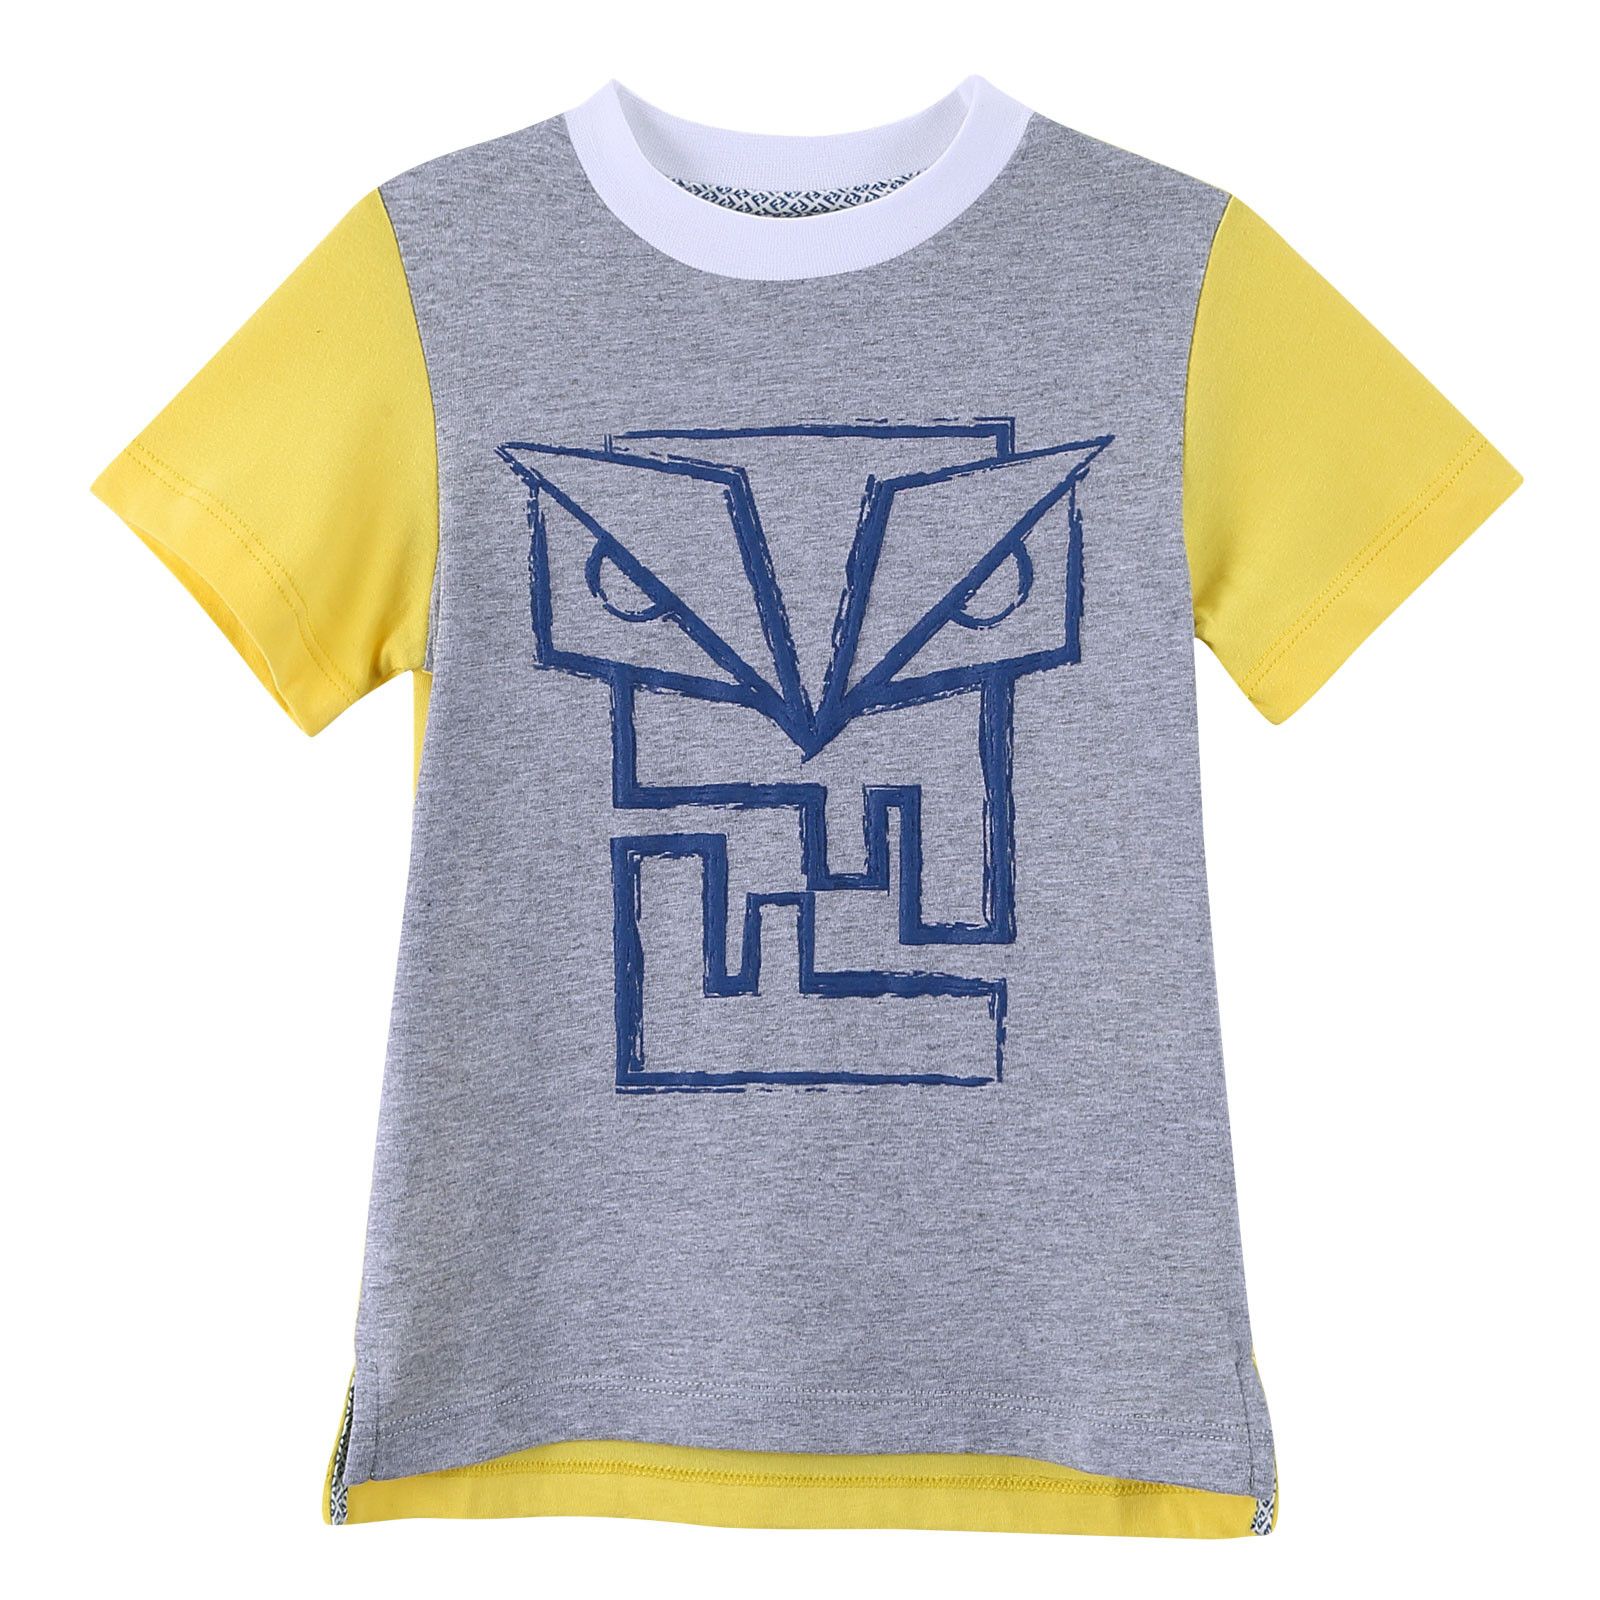 Boys Grey&Yellow 'FF Monster' Printed Cotton T-Shirt - CÉMAROSE | Children's Fashion Store - 1